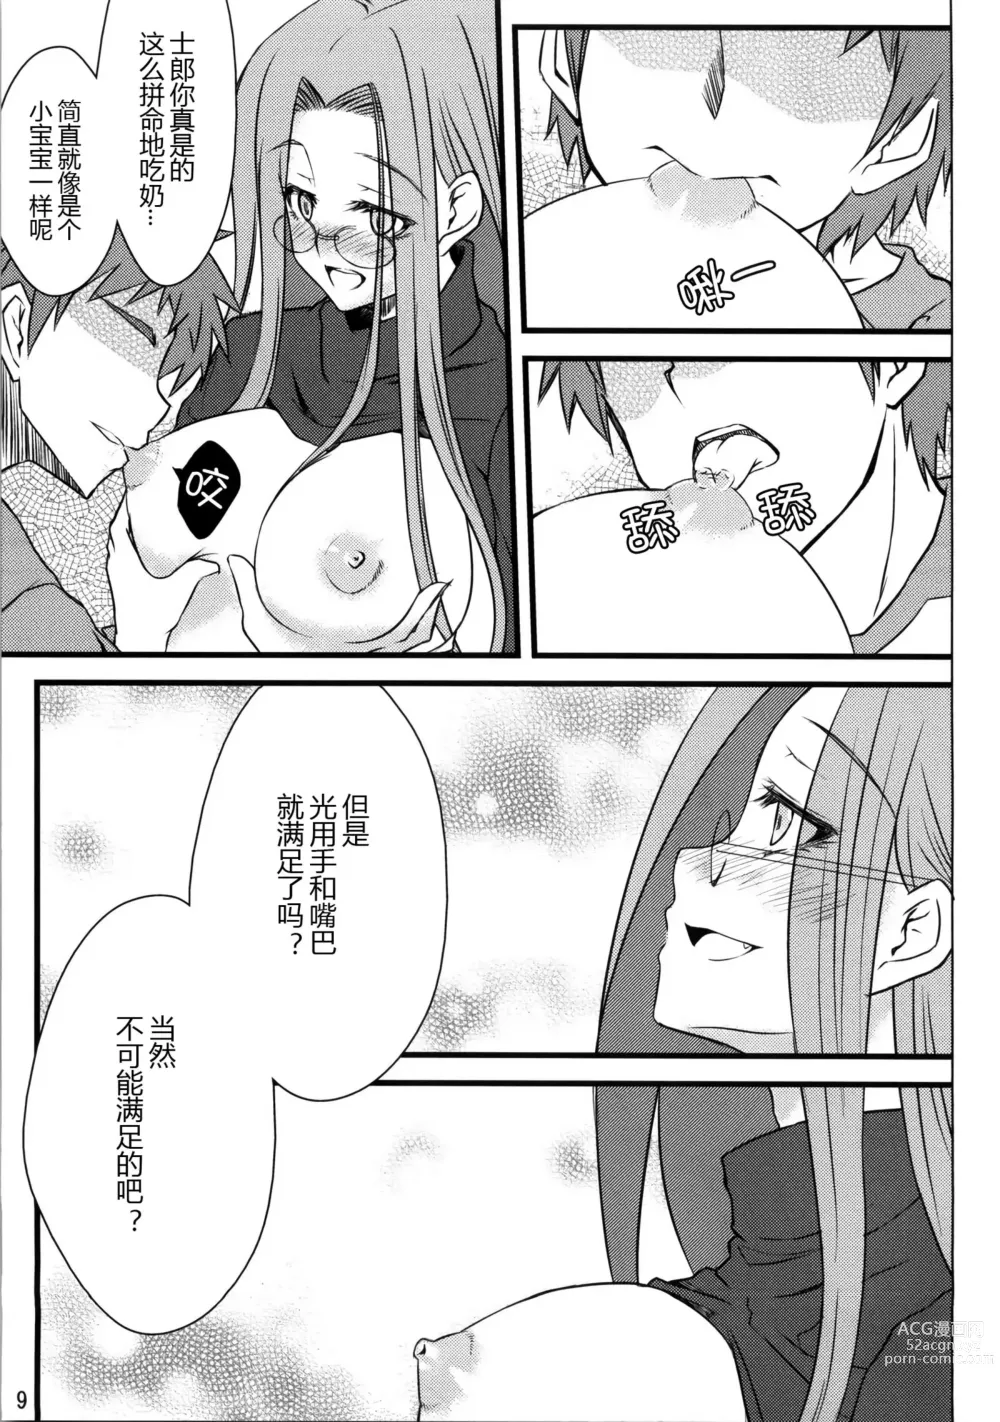 Page 9 of doujinshi R3